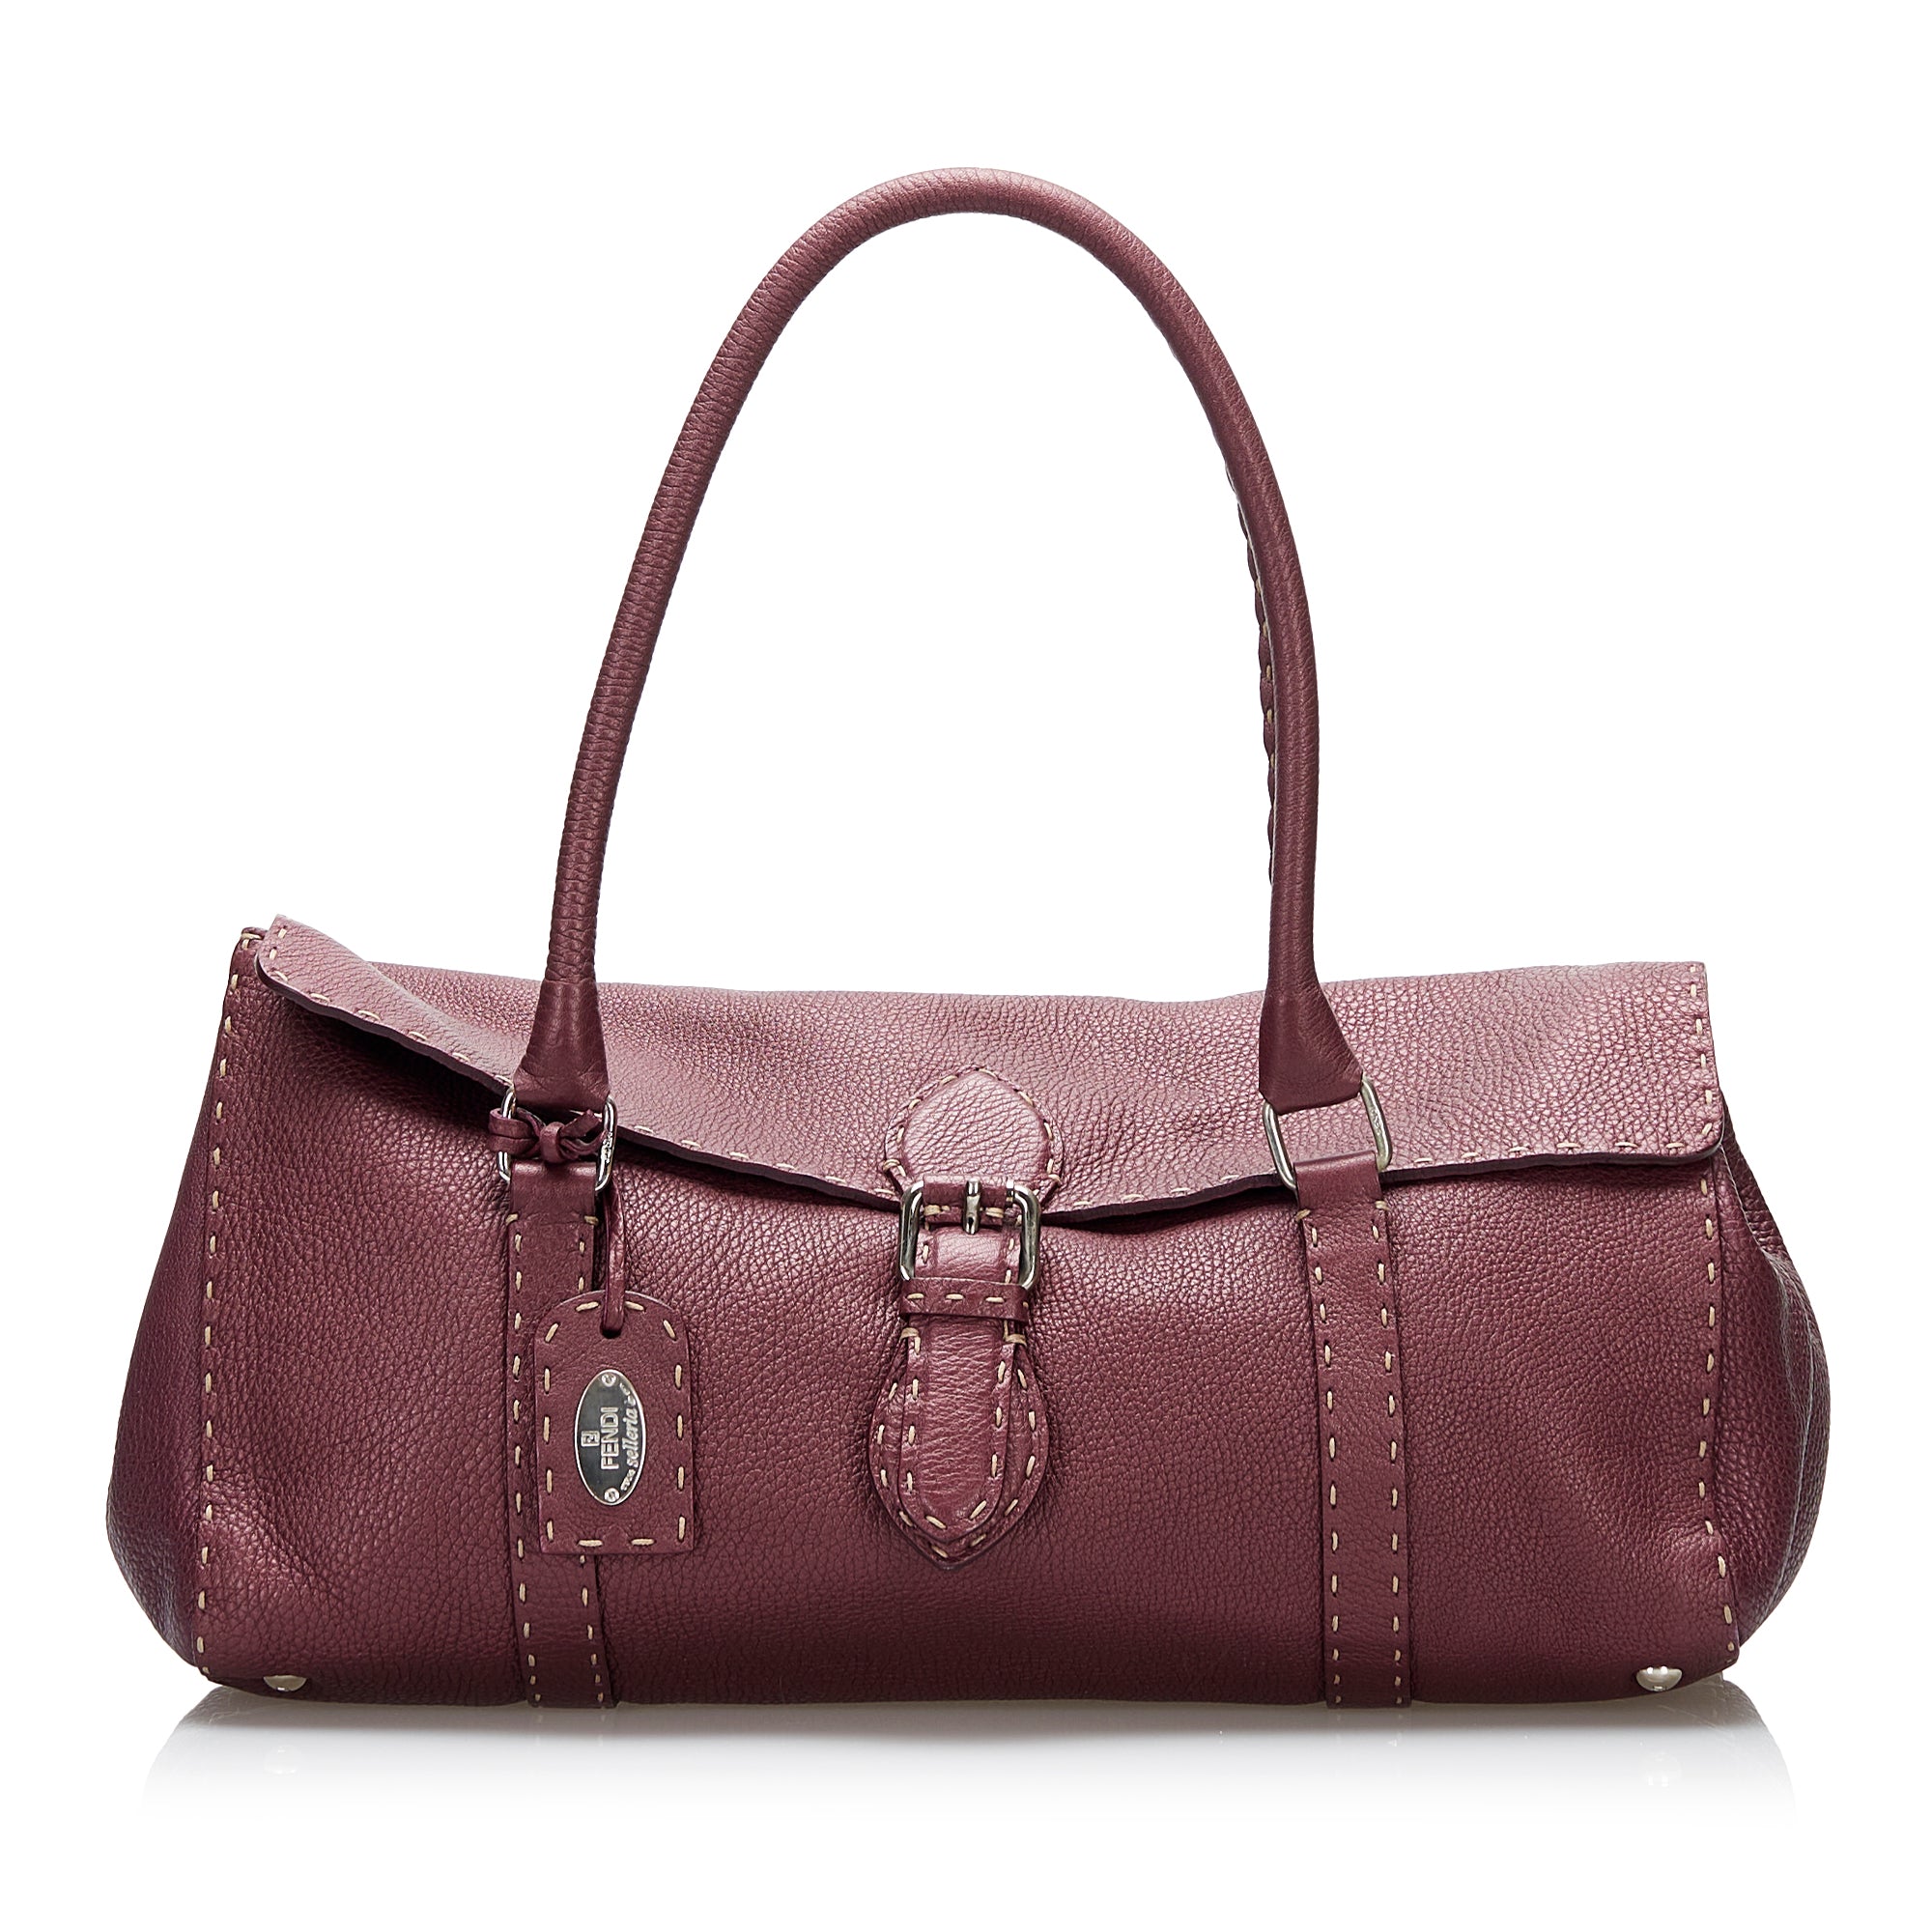 Fendi Authenticated First Leather Handbag